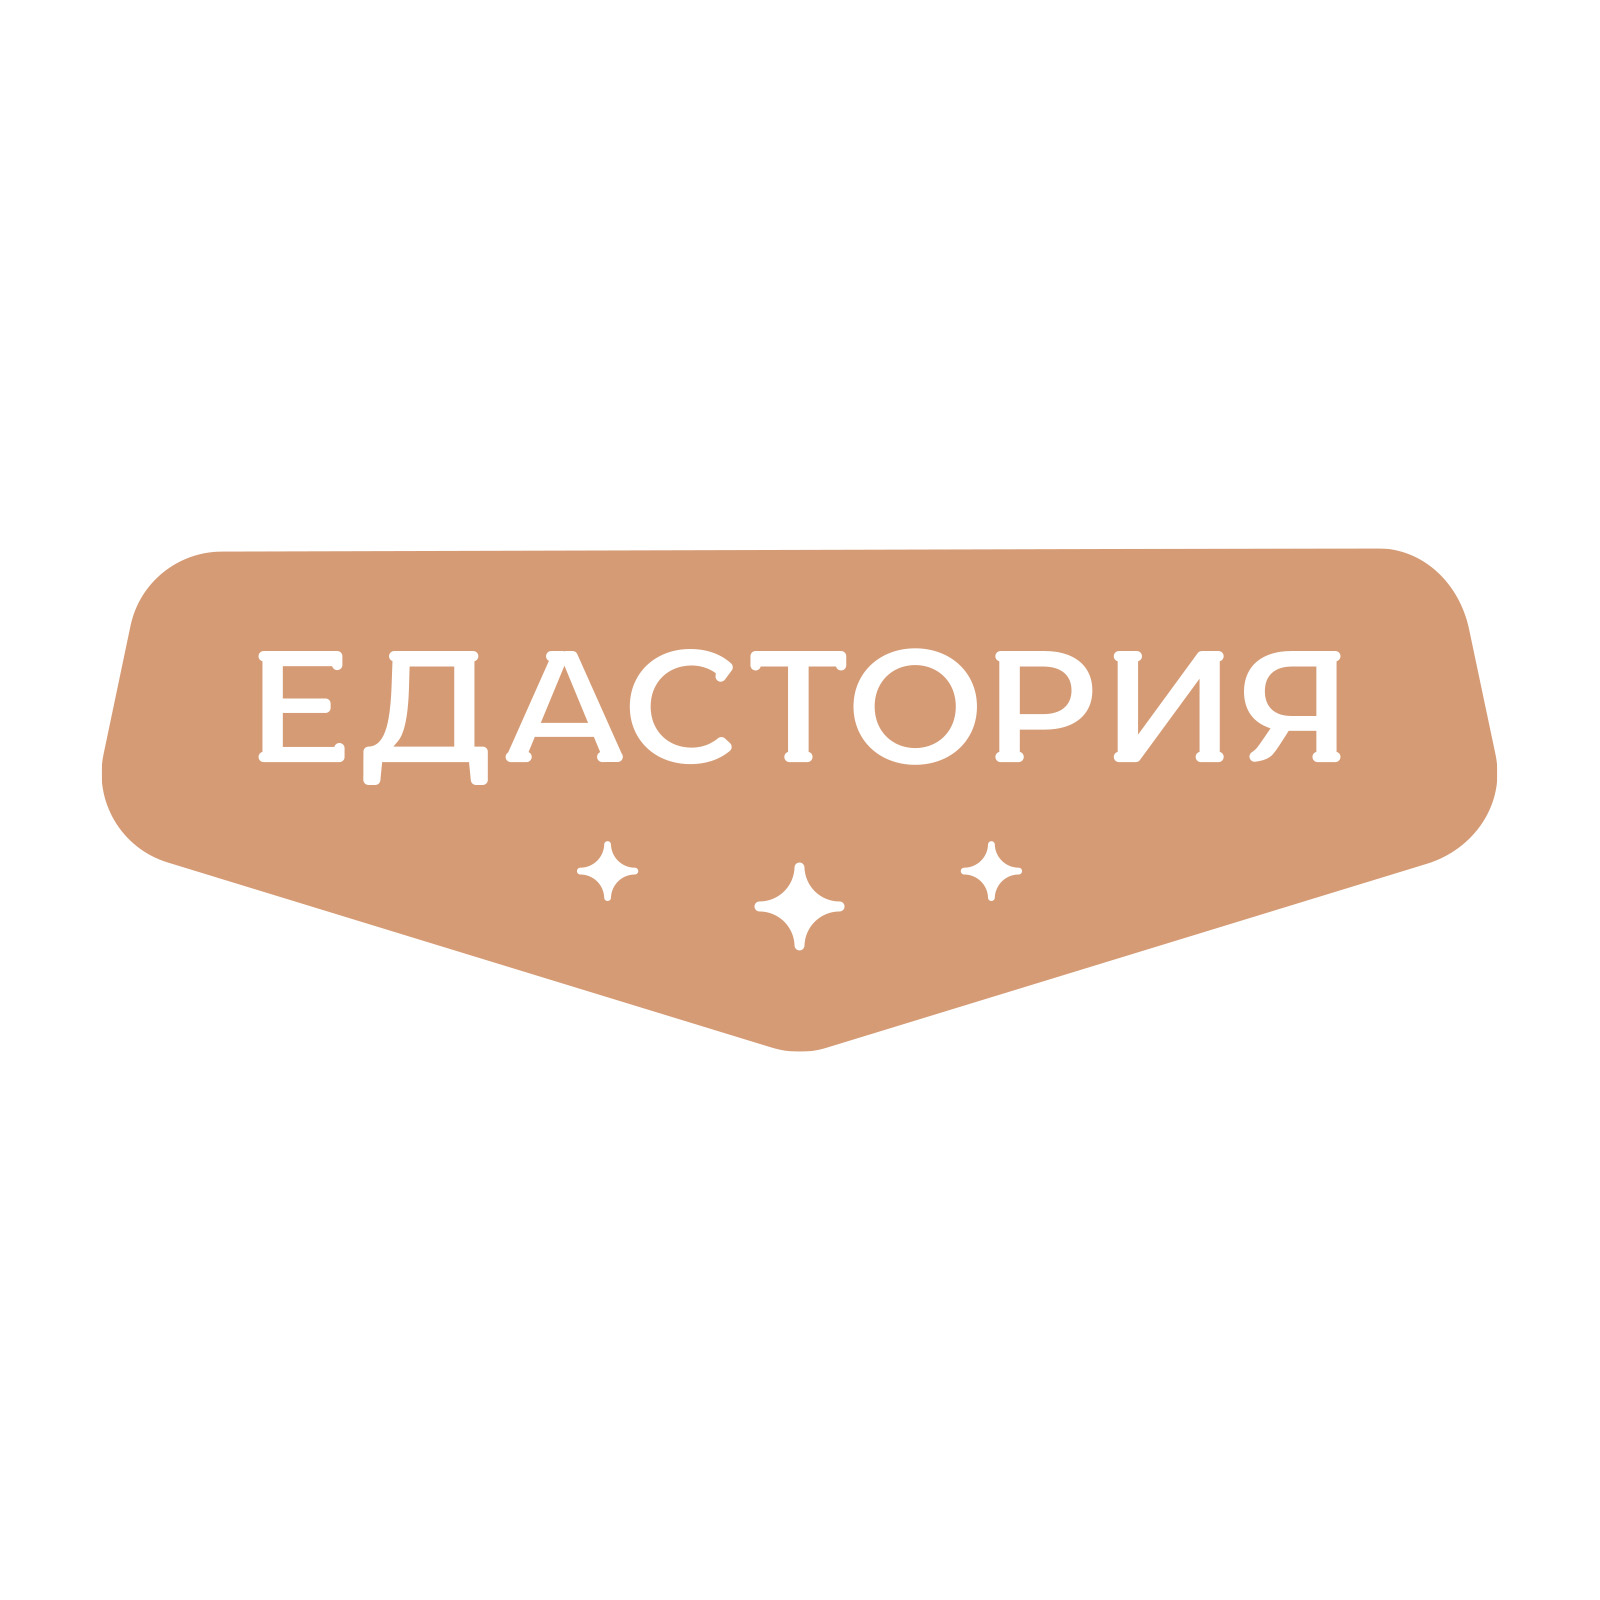 Edastoria logo design by logo designer Stanislav+Regis for your inspiration and for the worlds largest logo competition